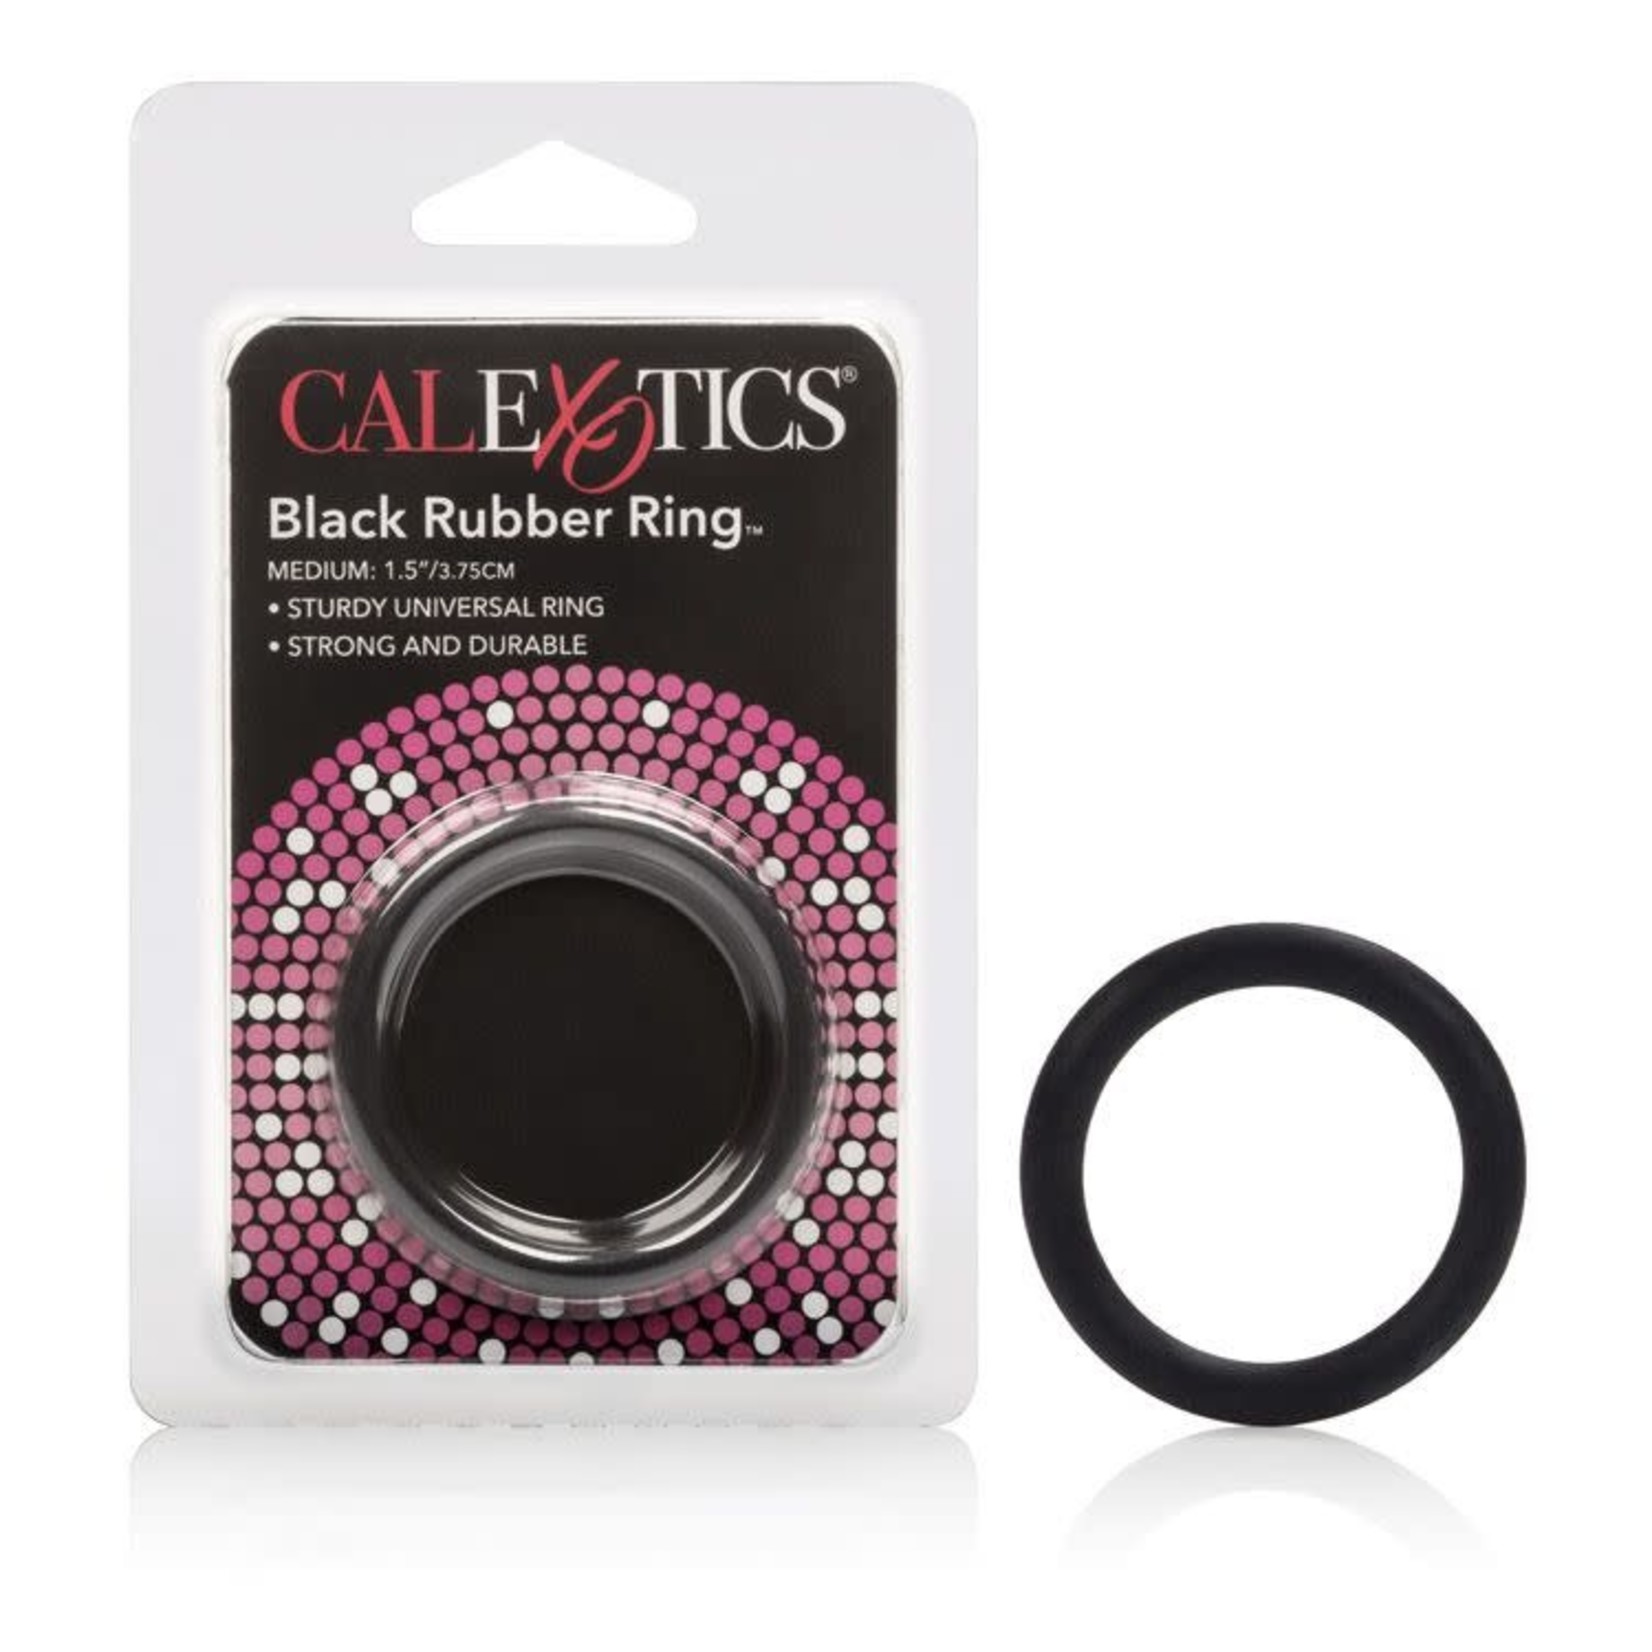 CALEXOTICS CALEXOTICS - BLACK RUBBER RING - MEDIUM